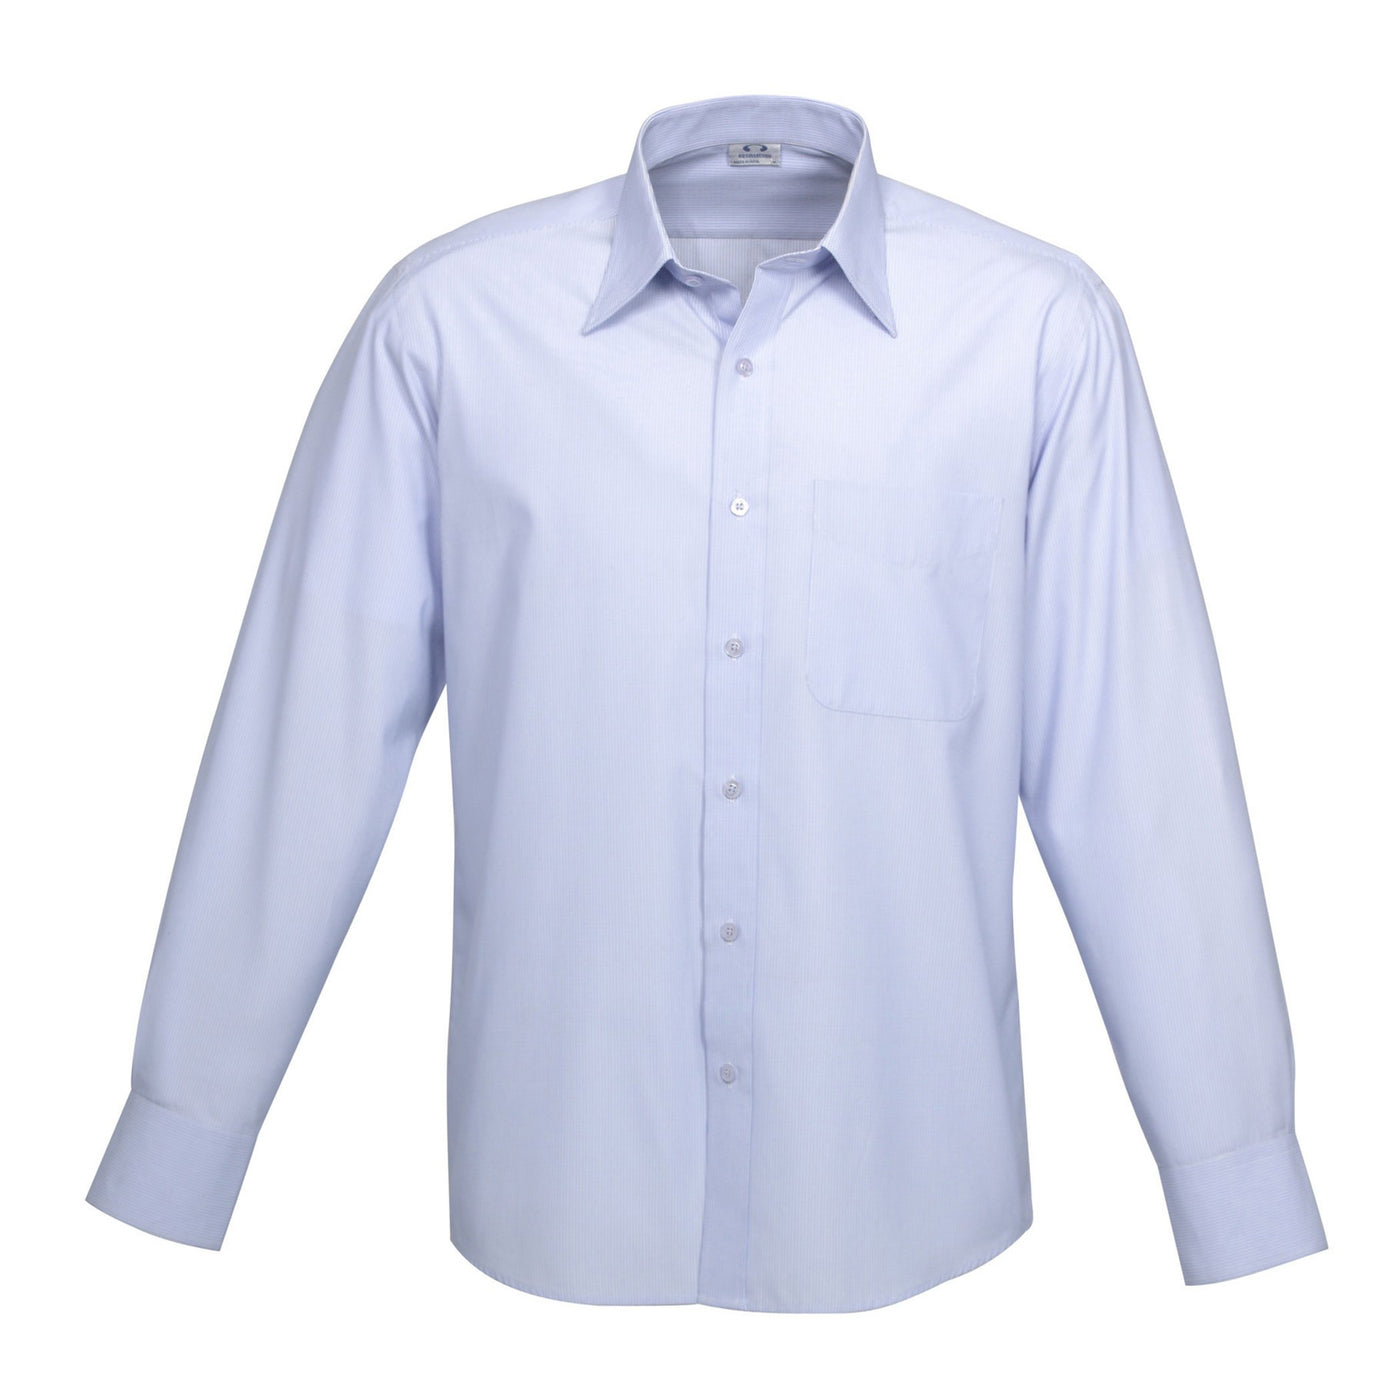 Biz Collection Ambassador Shirt Long Sleeve - Mens